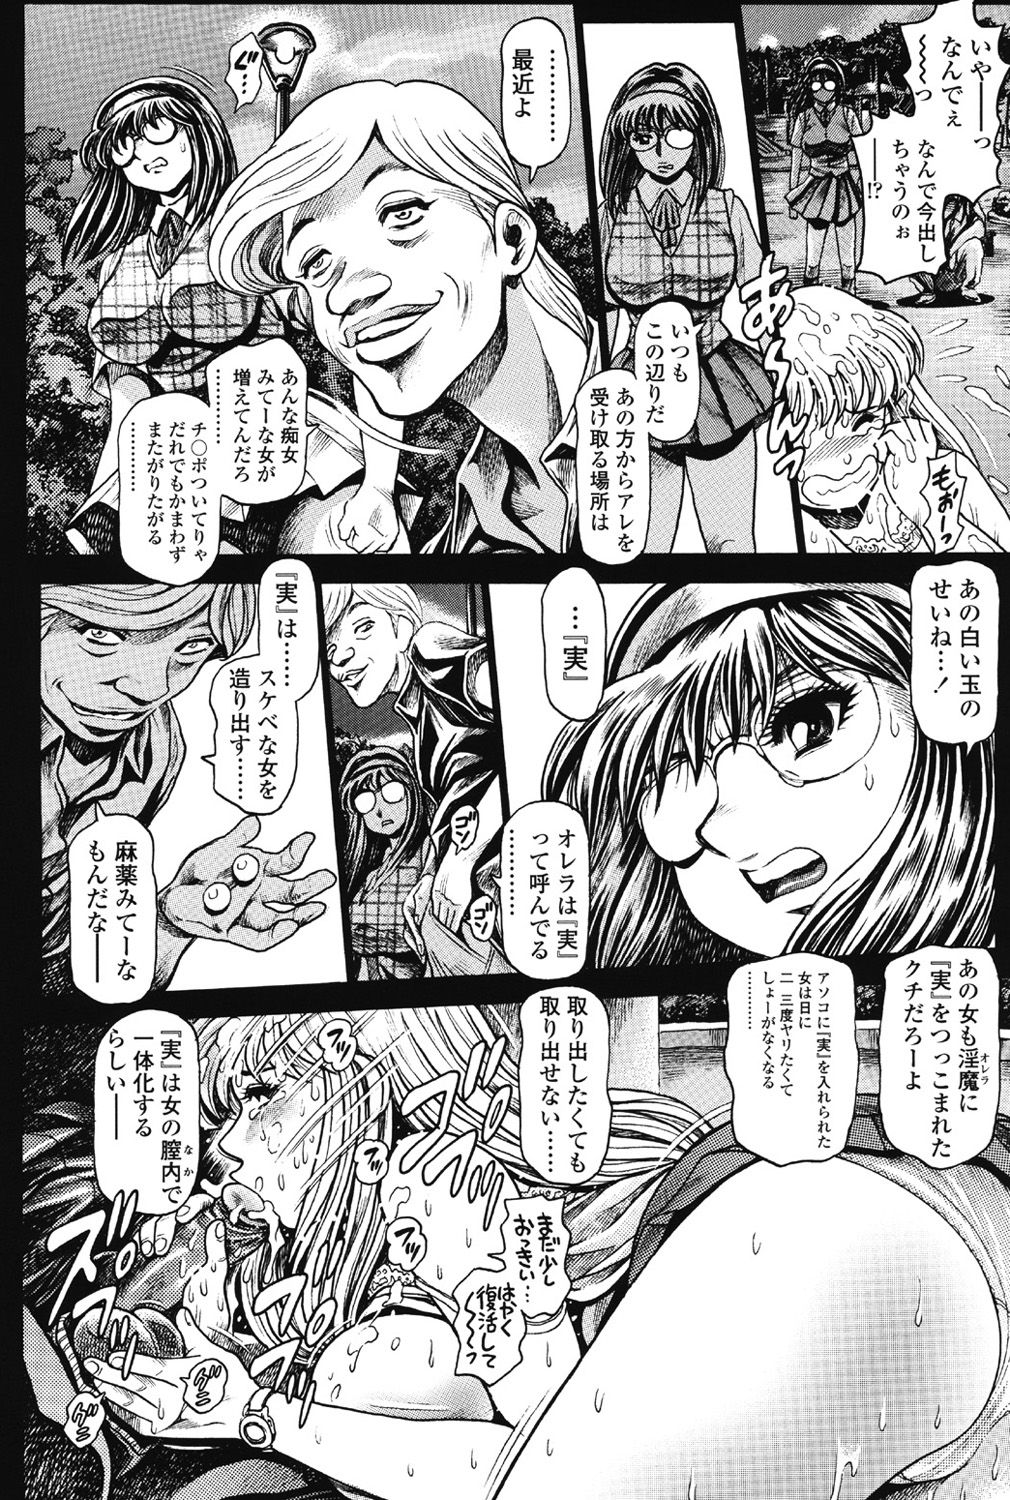 [Chataro] Nami SOS! 5 Previous Story Girls Another Days Keiko - 001 [ちゃたろー] 奈美SOS！ 5ガールズ前話？景子アナザーデイズ - 001